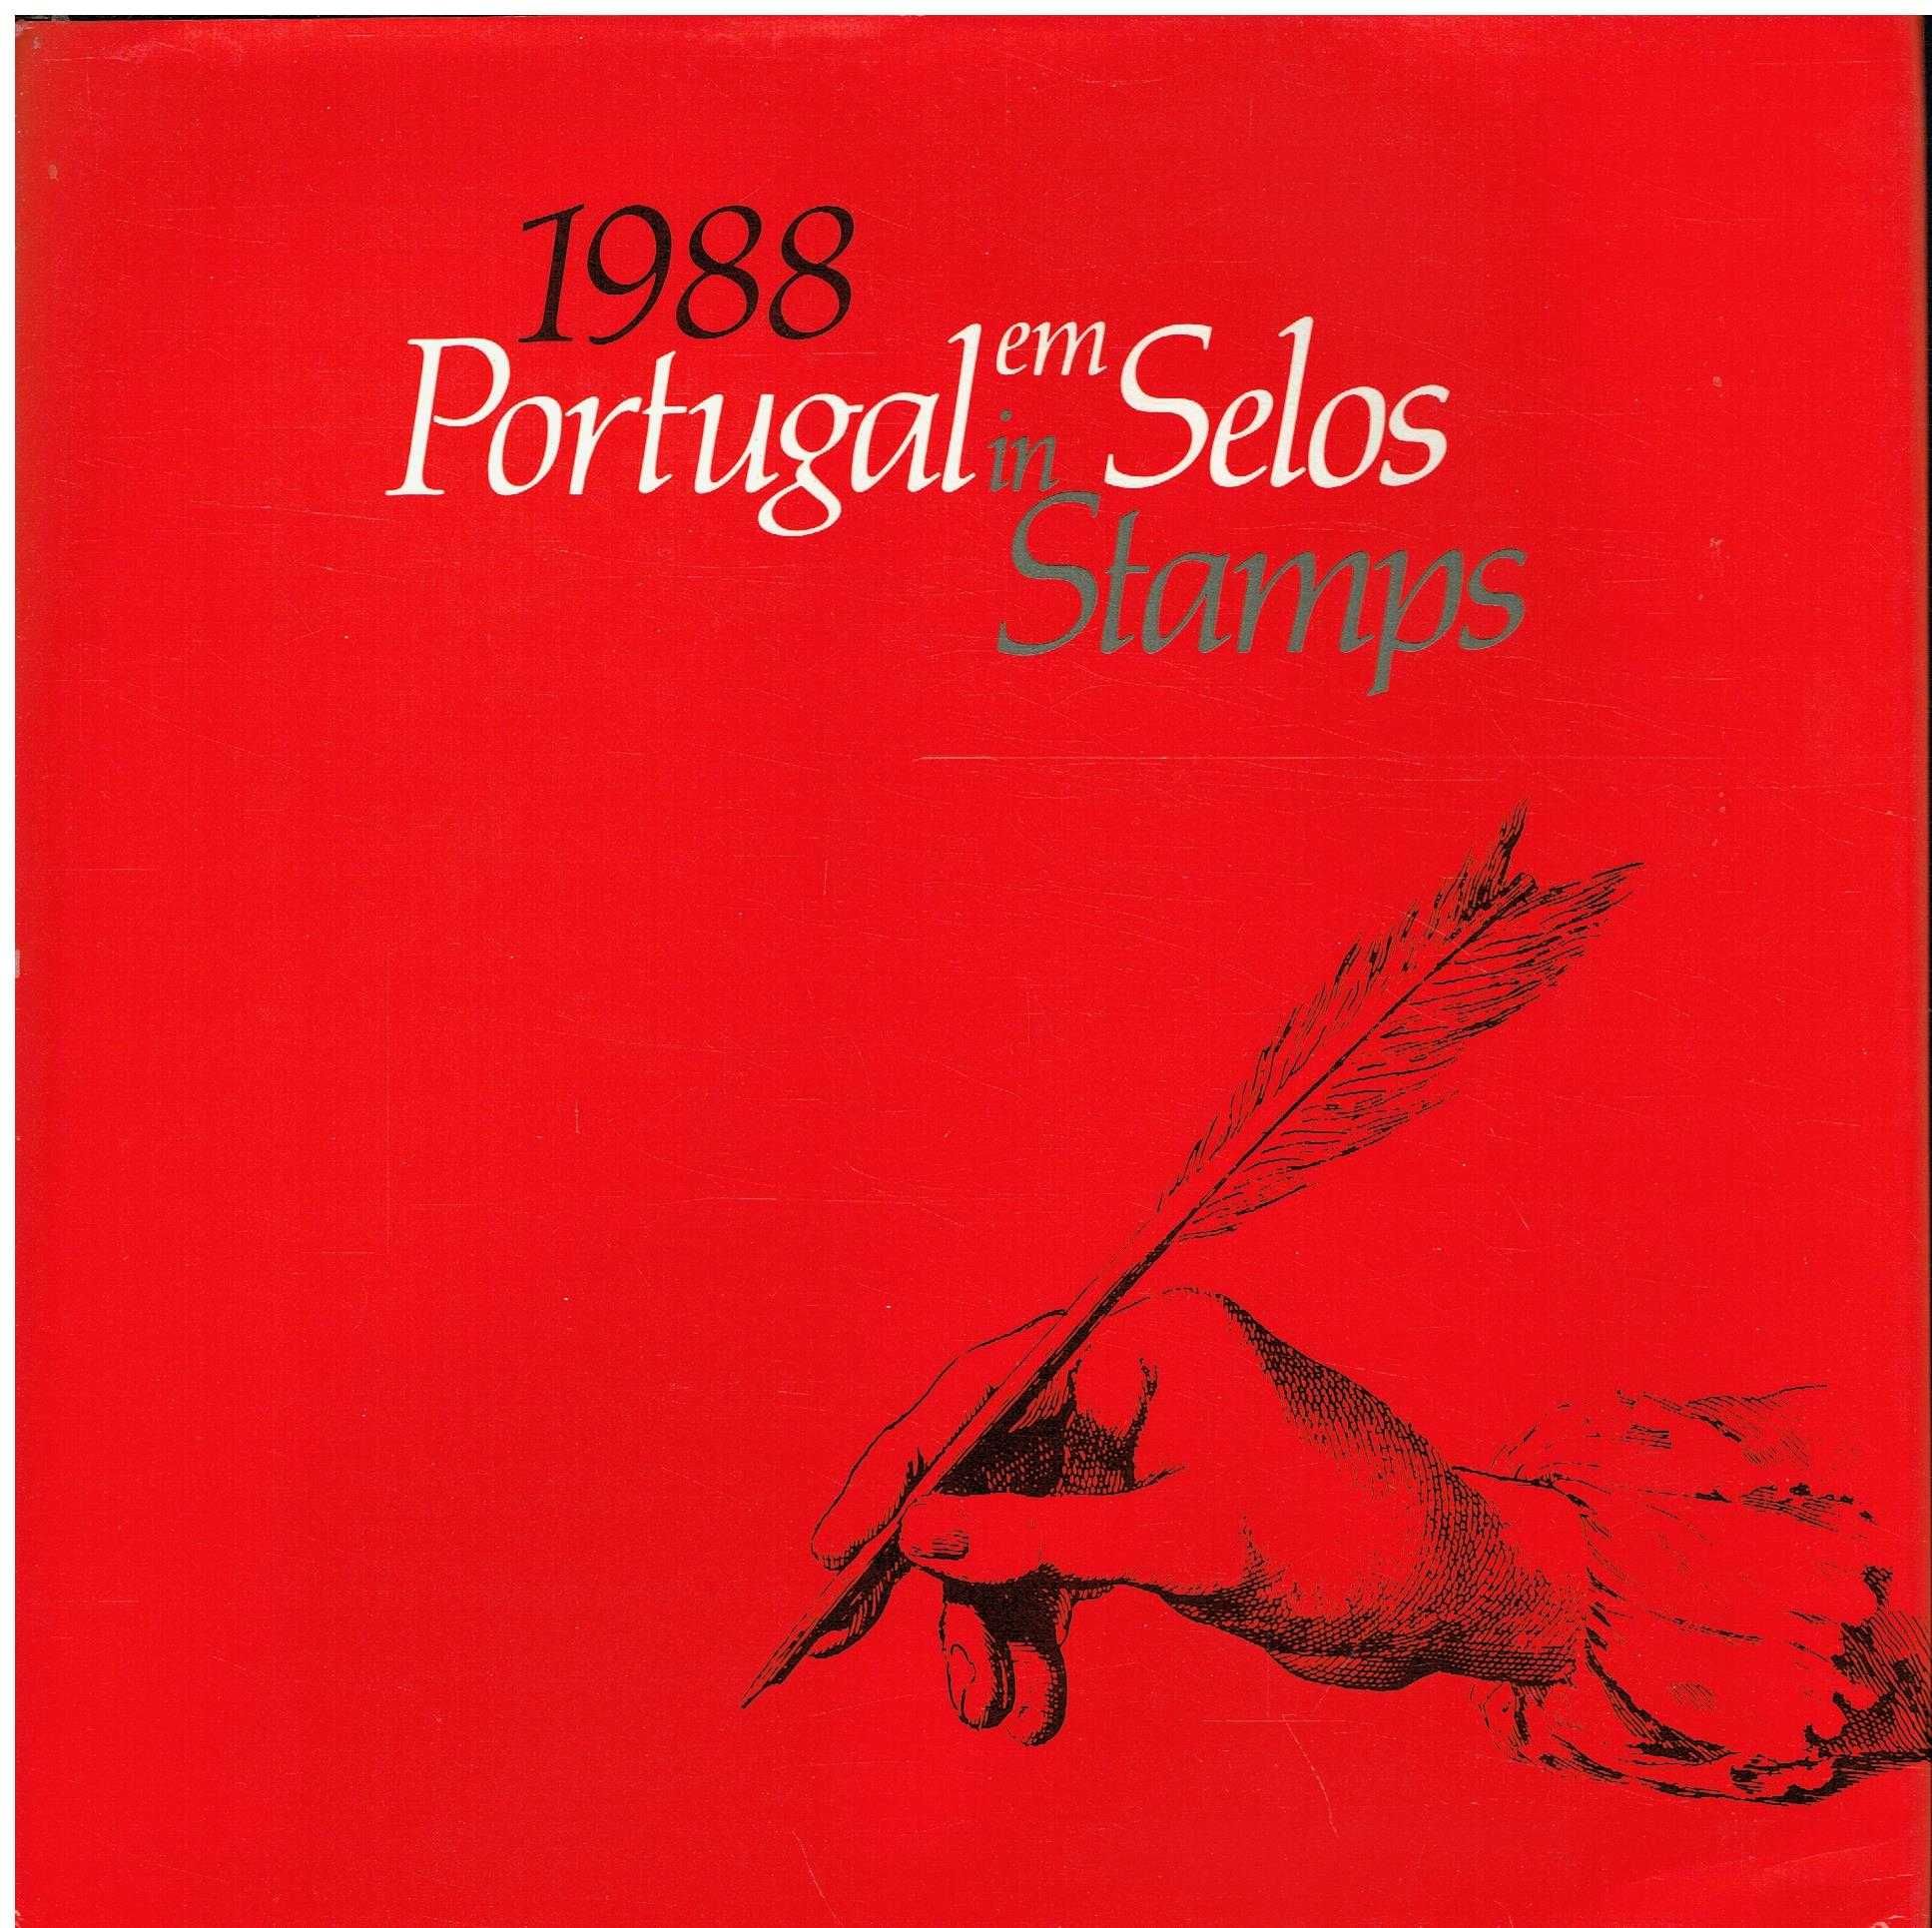 2826

Portugal em Selos 1988